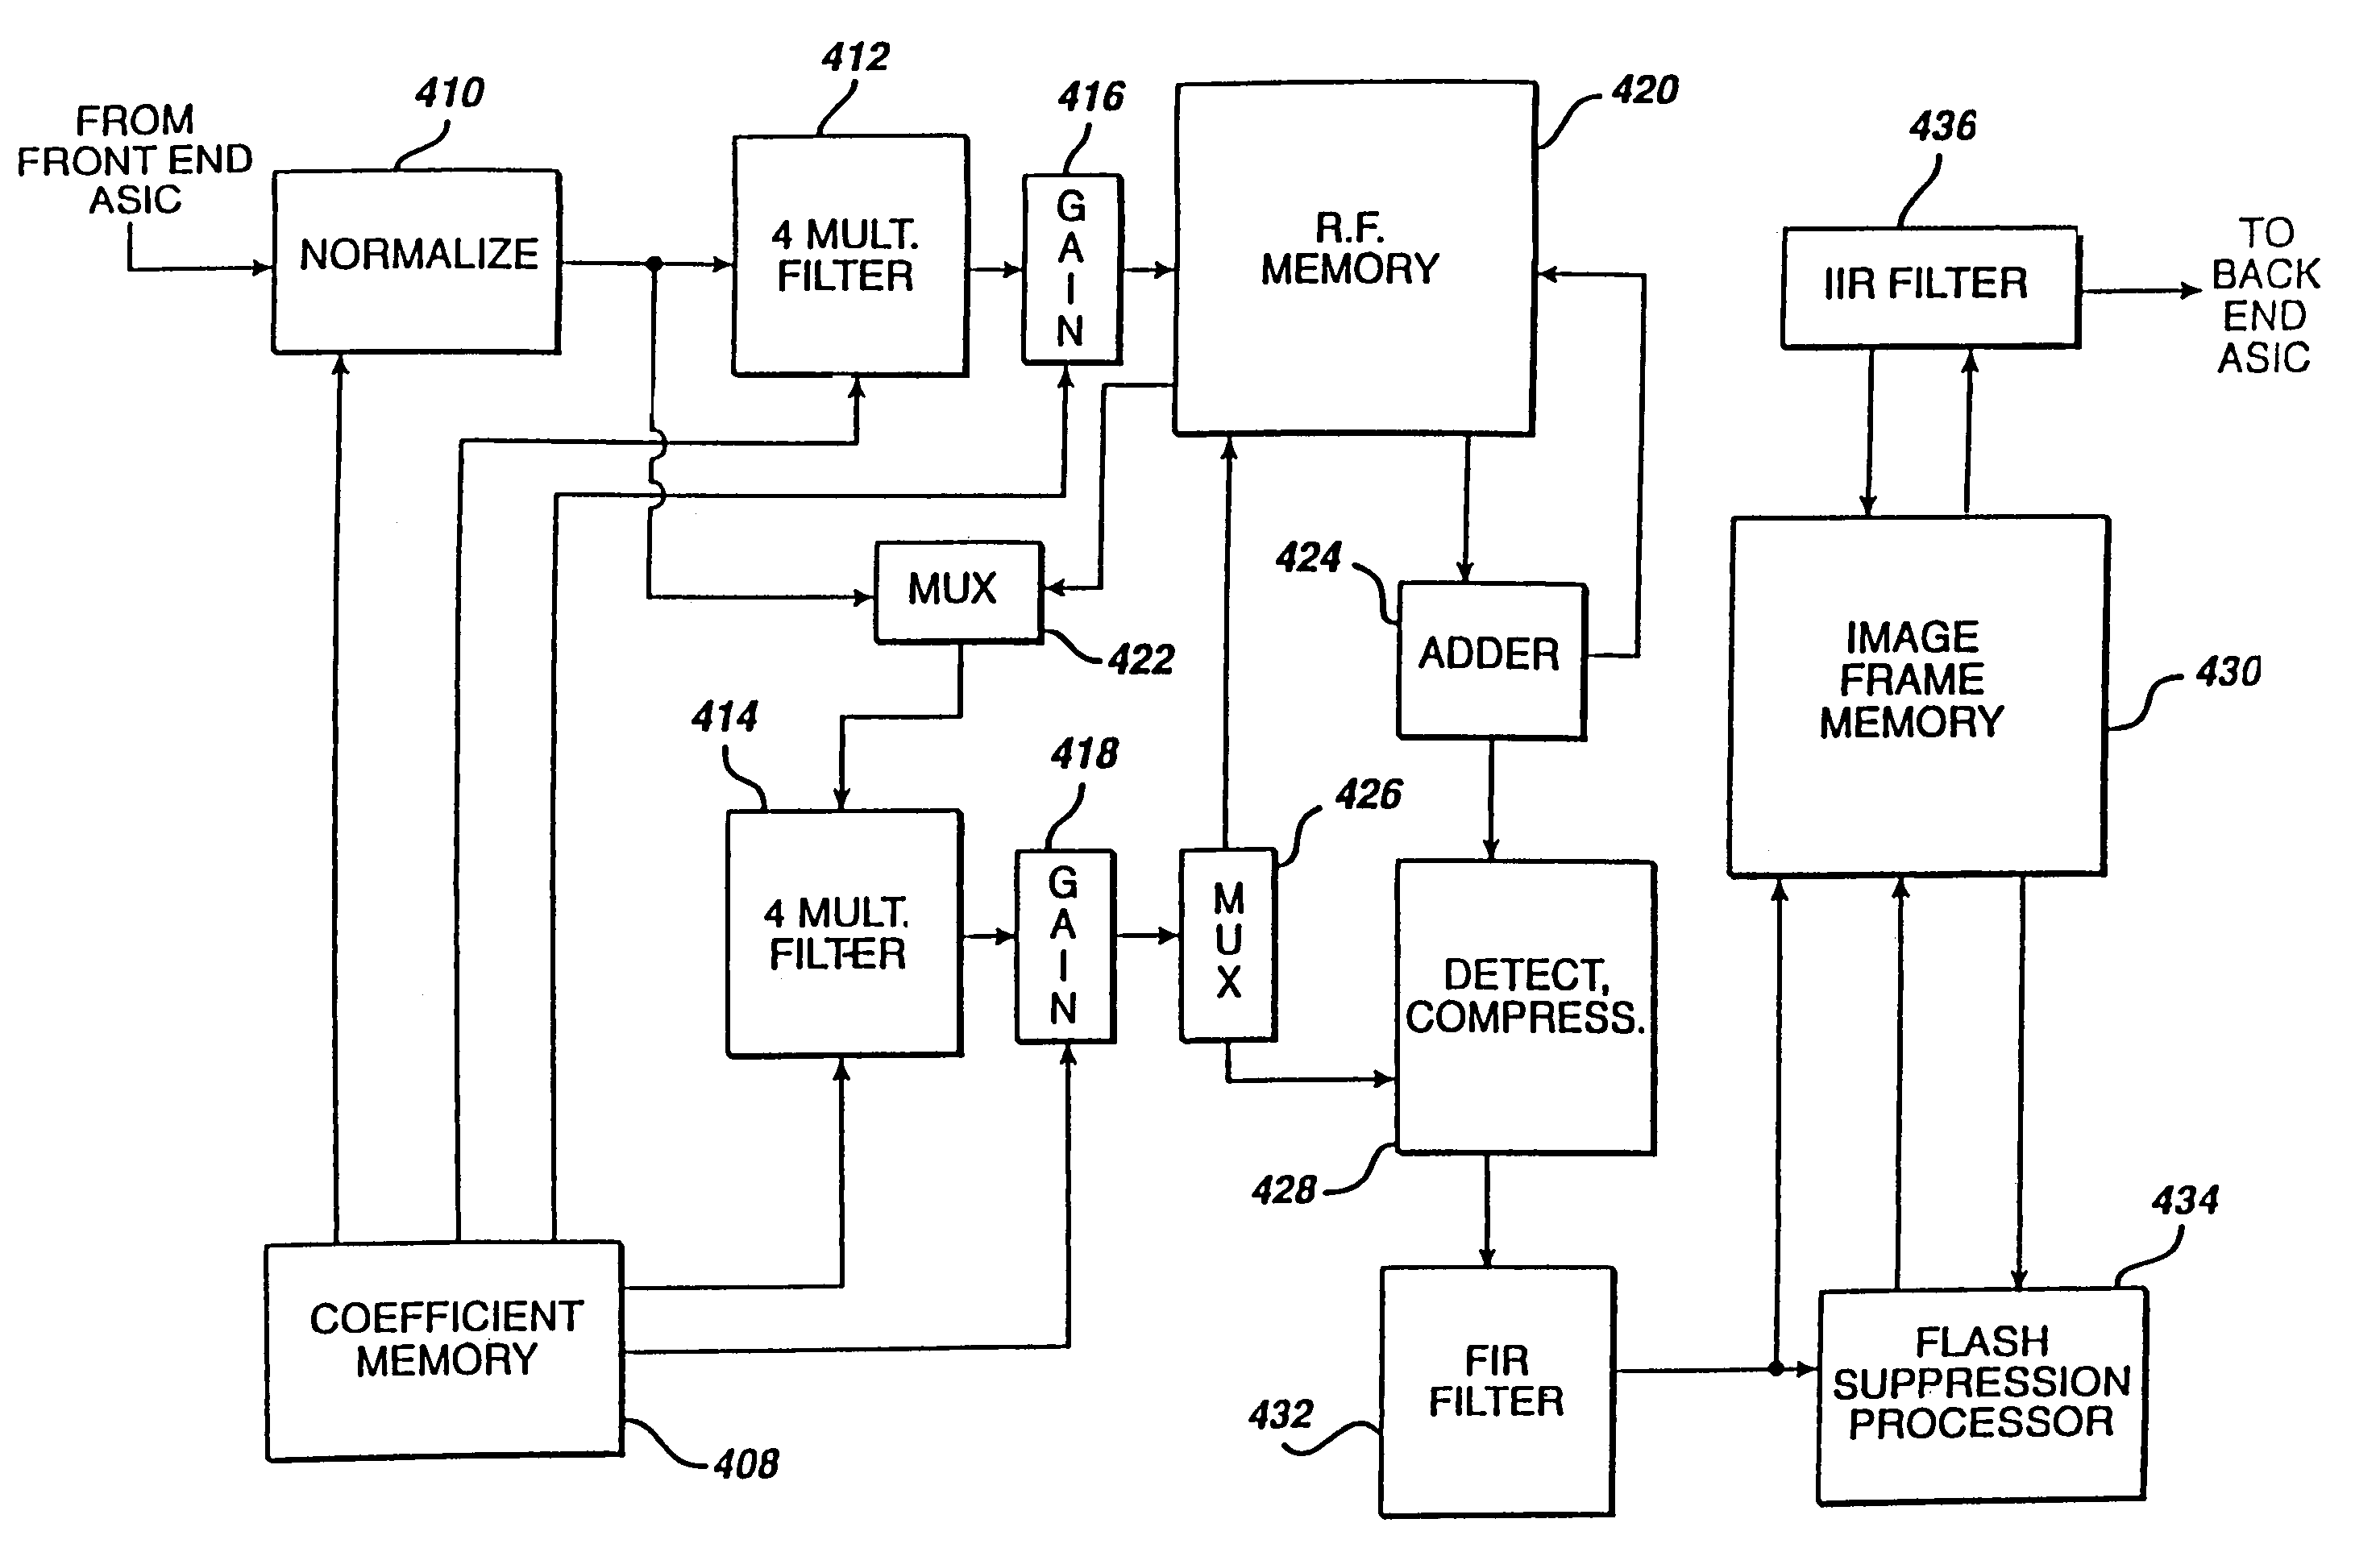 Ultrasonic signal processor for a hand held ultrasonic diagnostic instrument